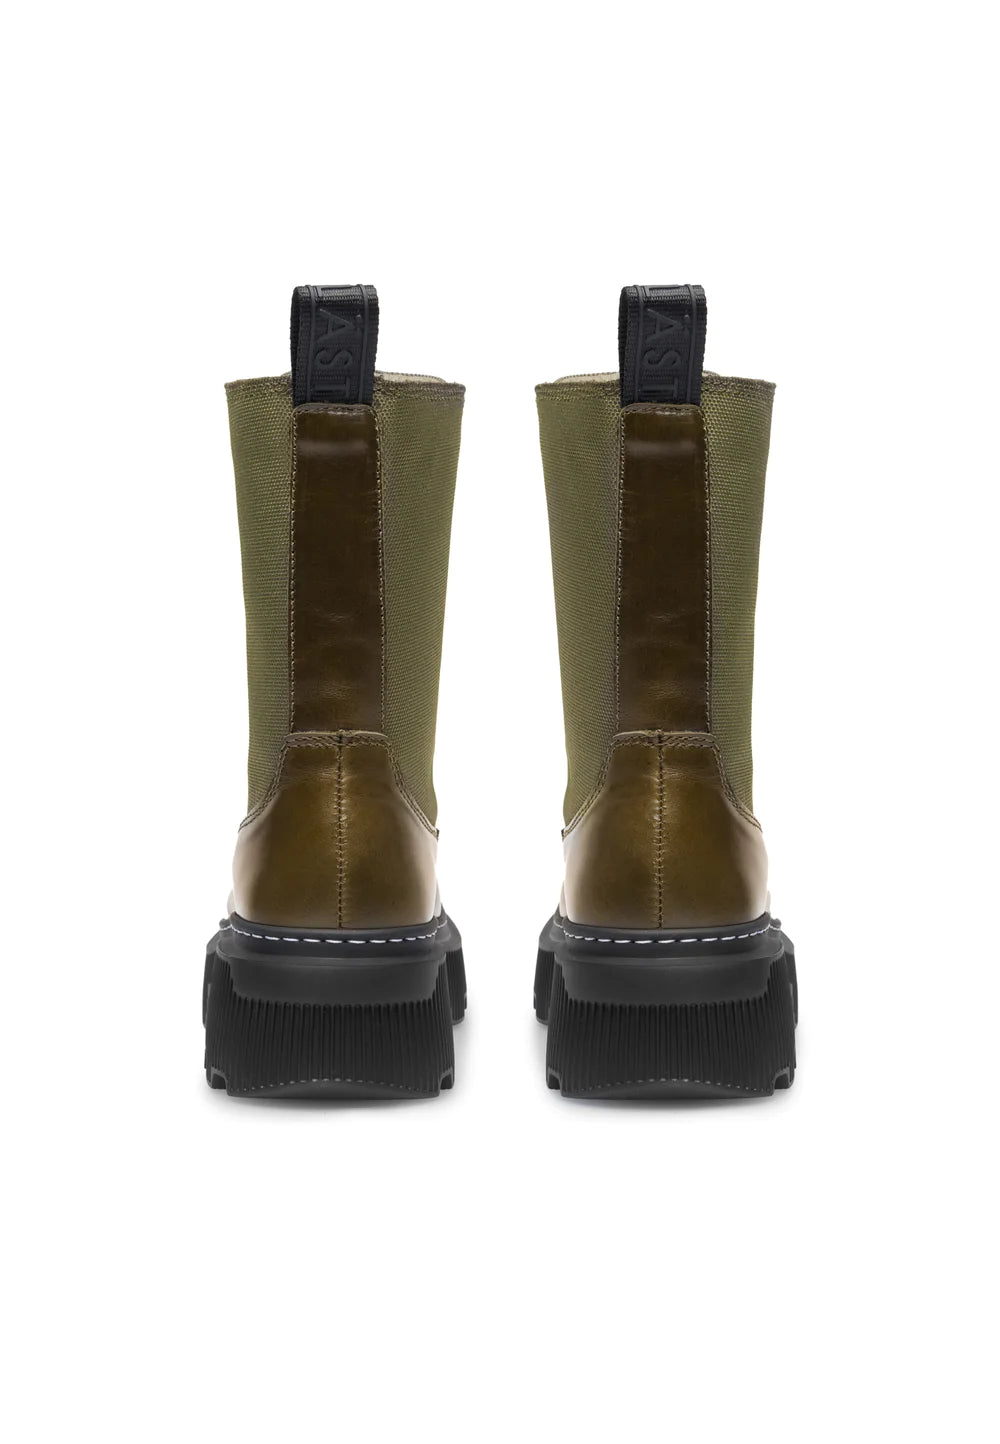 Caroline Leather/Textile Warm lining Boots Olive